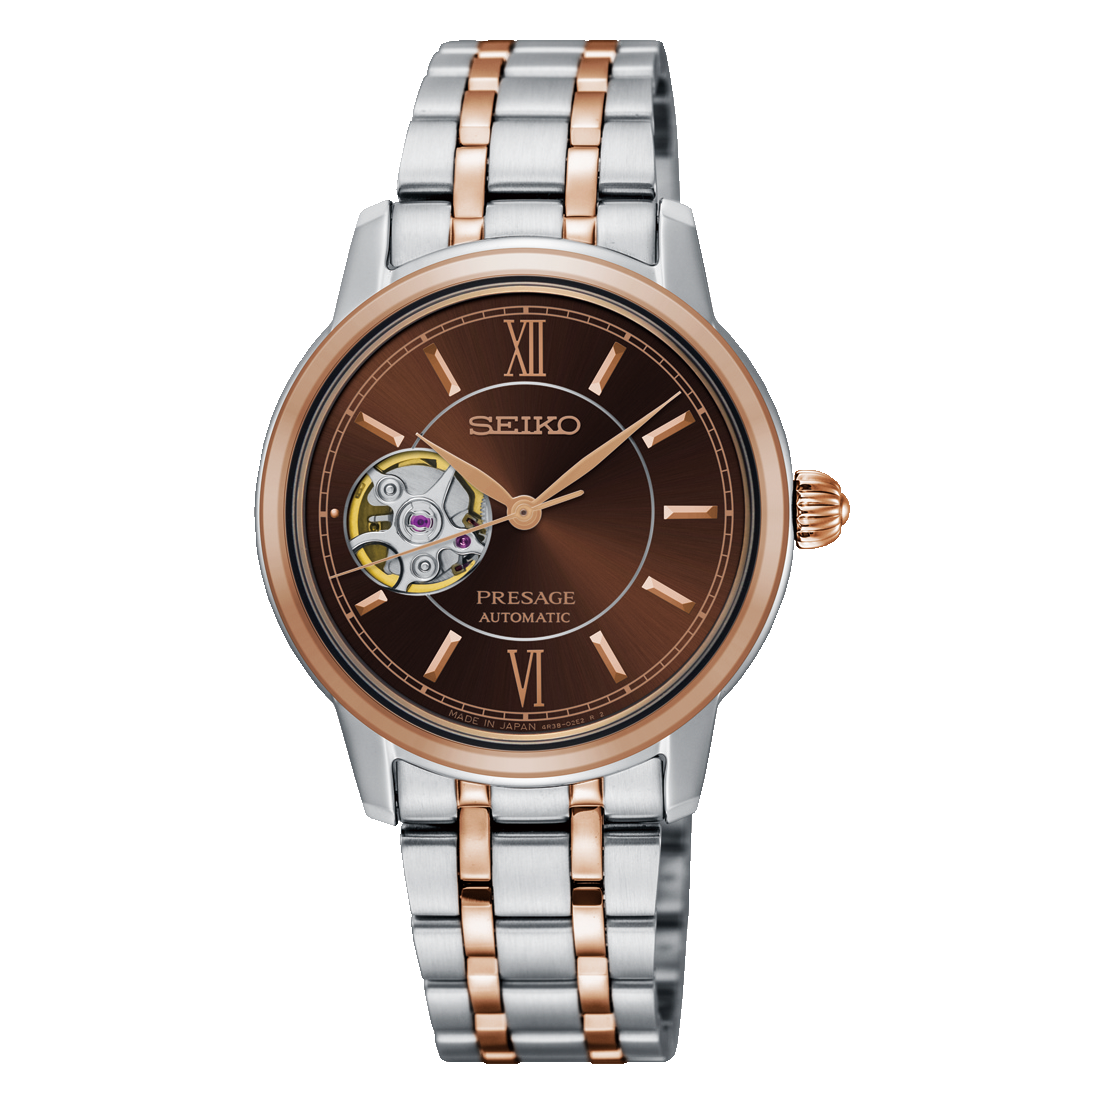 SEIKO SSA808J1 นาฬิกาผู้หญิง Seiko รุ่น SSA808J1, PRESAGE Automatic Open  Heart Women's Watch  ศูนย์รวมนาฬิกาแบรนด์เนม  และนาฬิกาสวิสหรูของแท้ 100% สินค้าหลากหลายแบรนด์ มาใหม่ทุกสับดาห์  สินค้าคุณภาพมาตรฐานเดียวกับในเคาน์เตอร์แบรนด์ ...